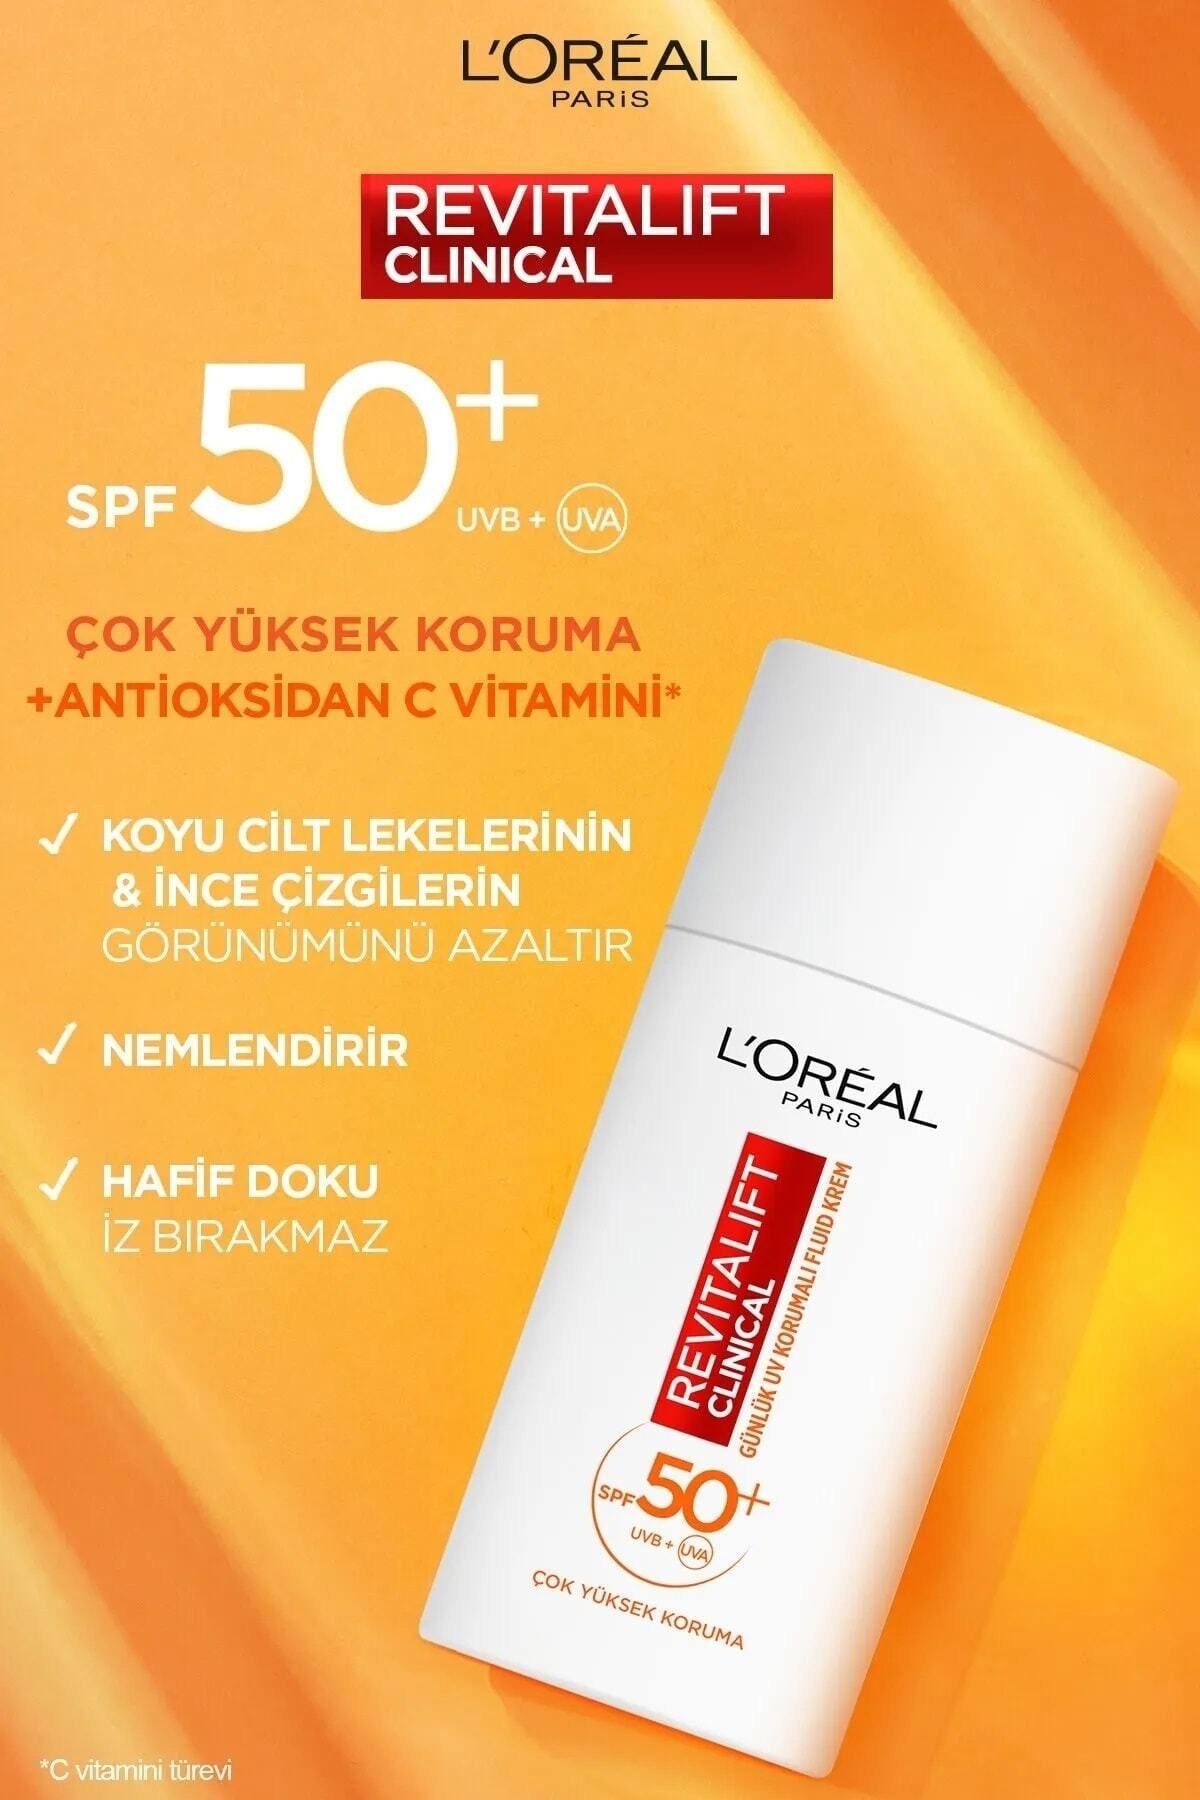 L'Oreal Paris کرم ضدآفتاب روزانه با SPF 50+ و محافظت بالا از پوست صورت Revitalift Clinical 50 میلی لیتر